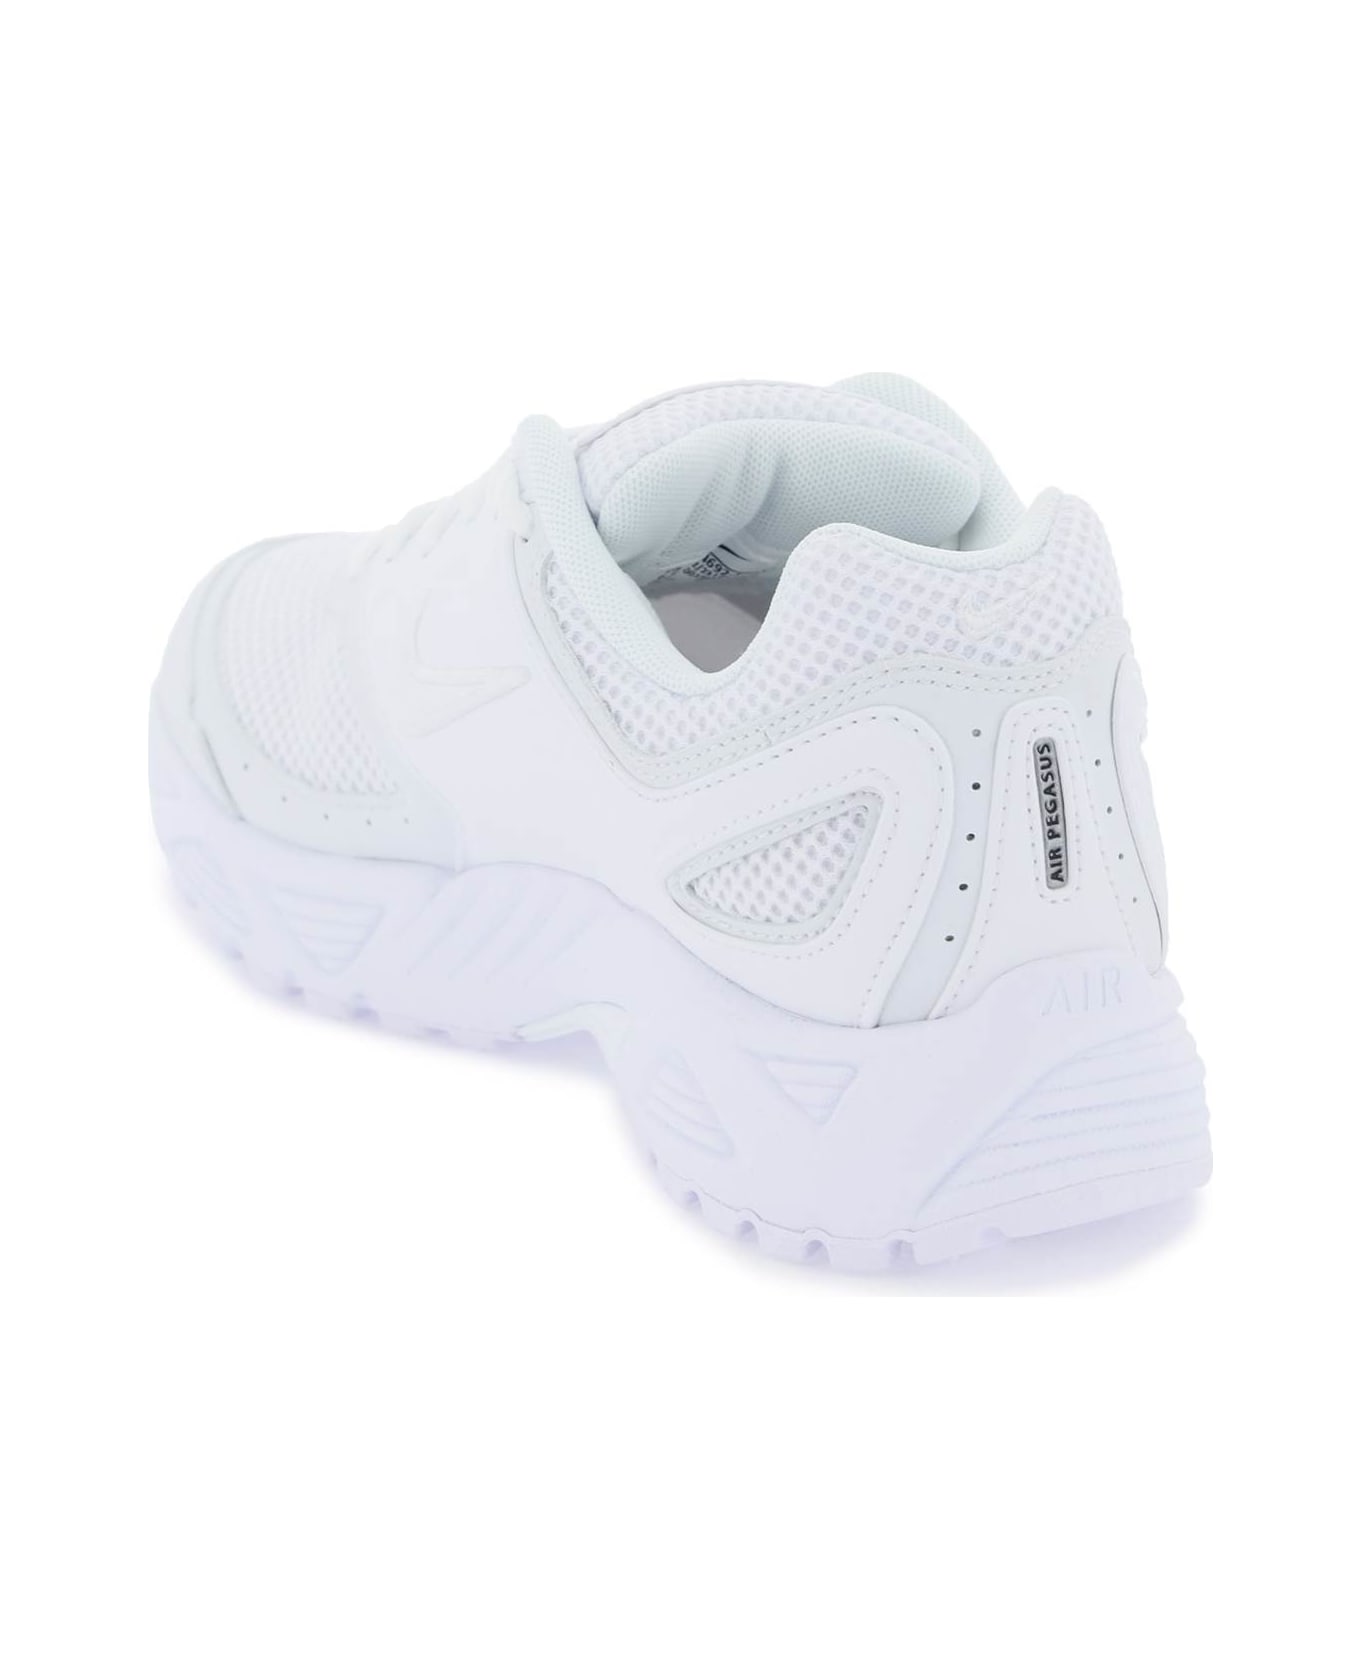 Comme Des Garçons Homme Plus Air Pegasus 2005 Sp Sneakers X Nike - WHITE (White) スニーカー